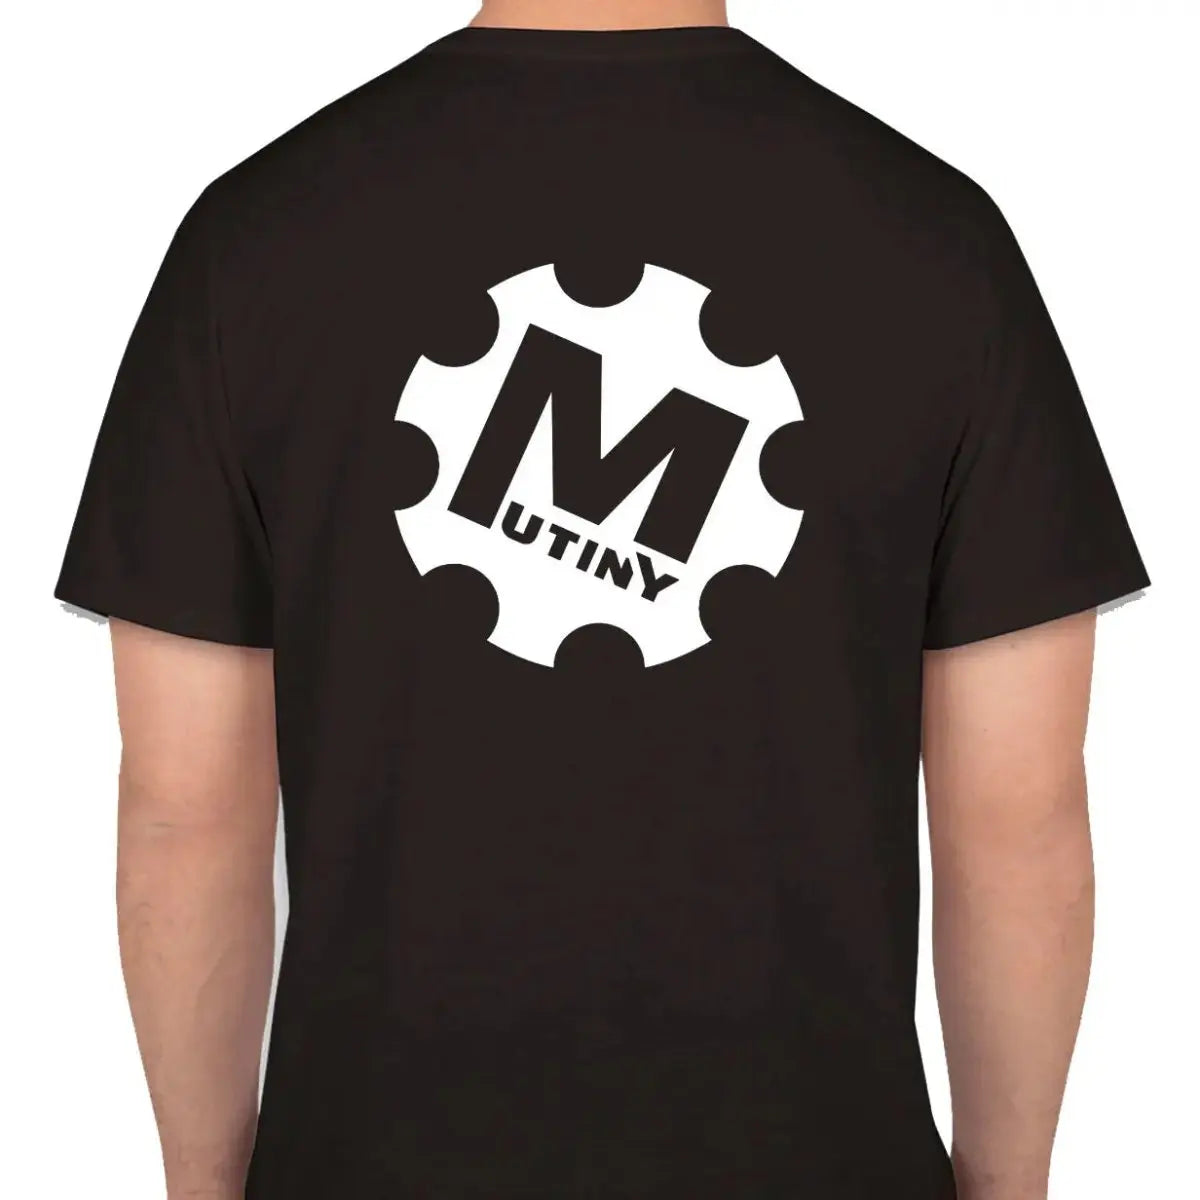 New MUTINY logo t-shirt